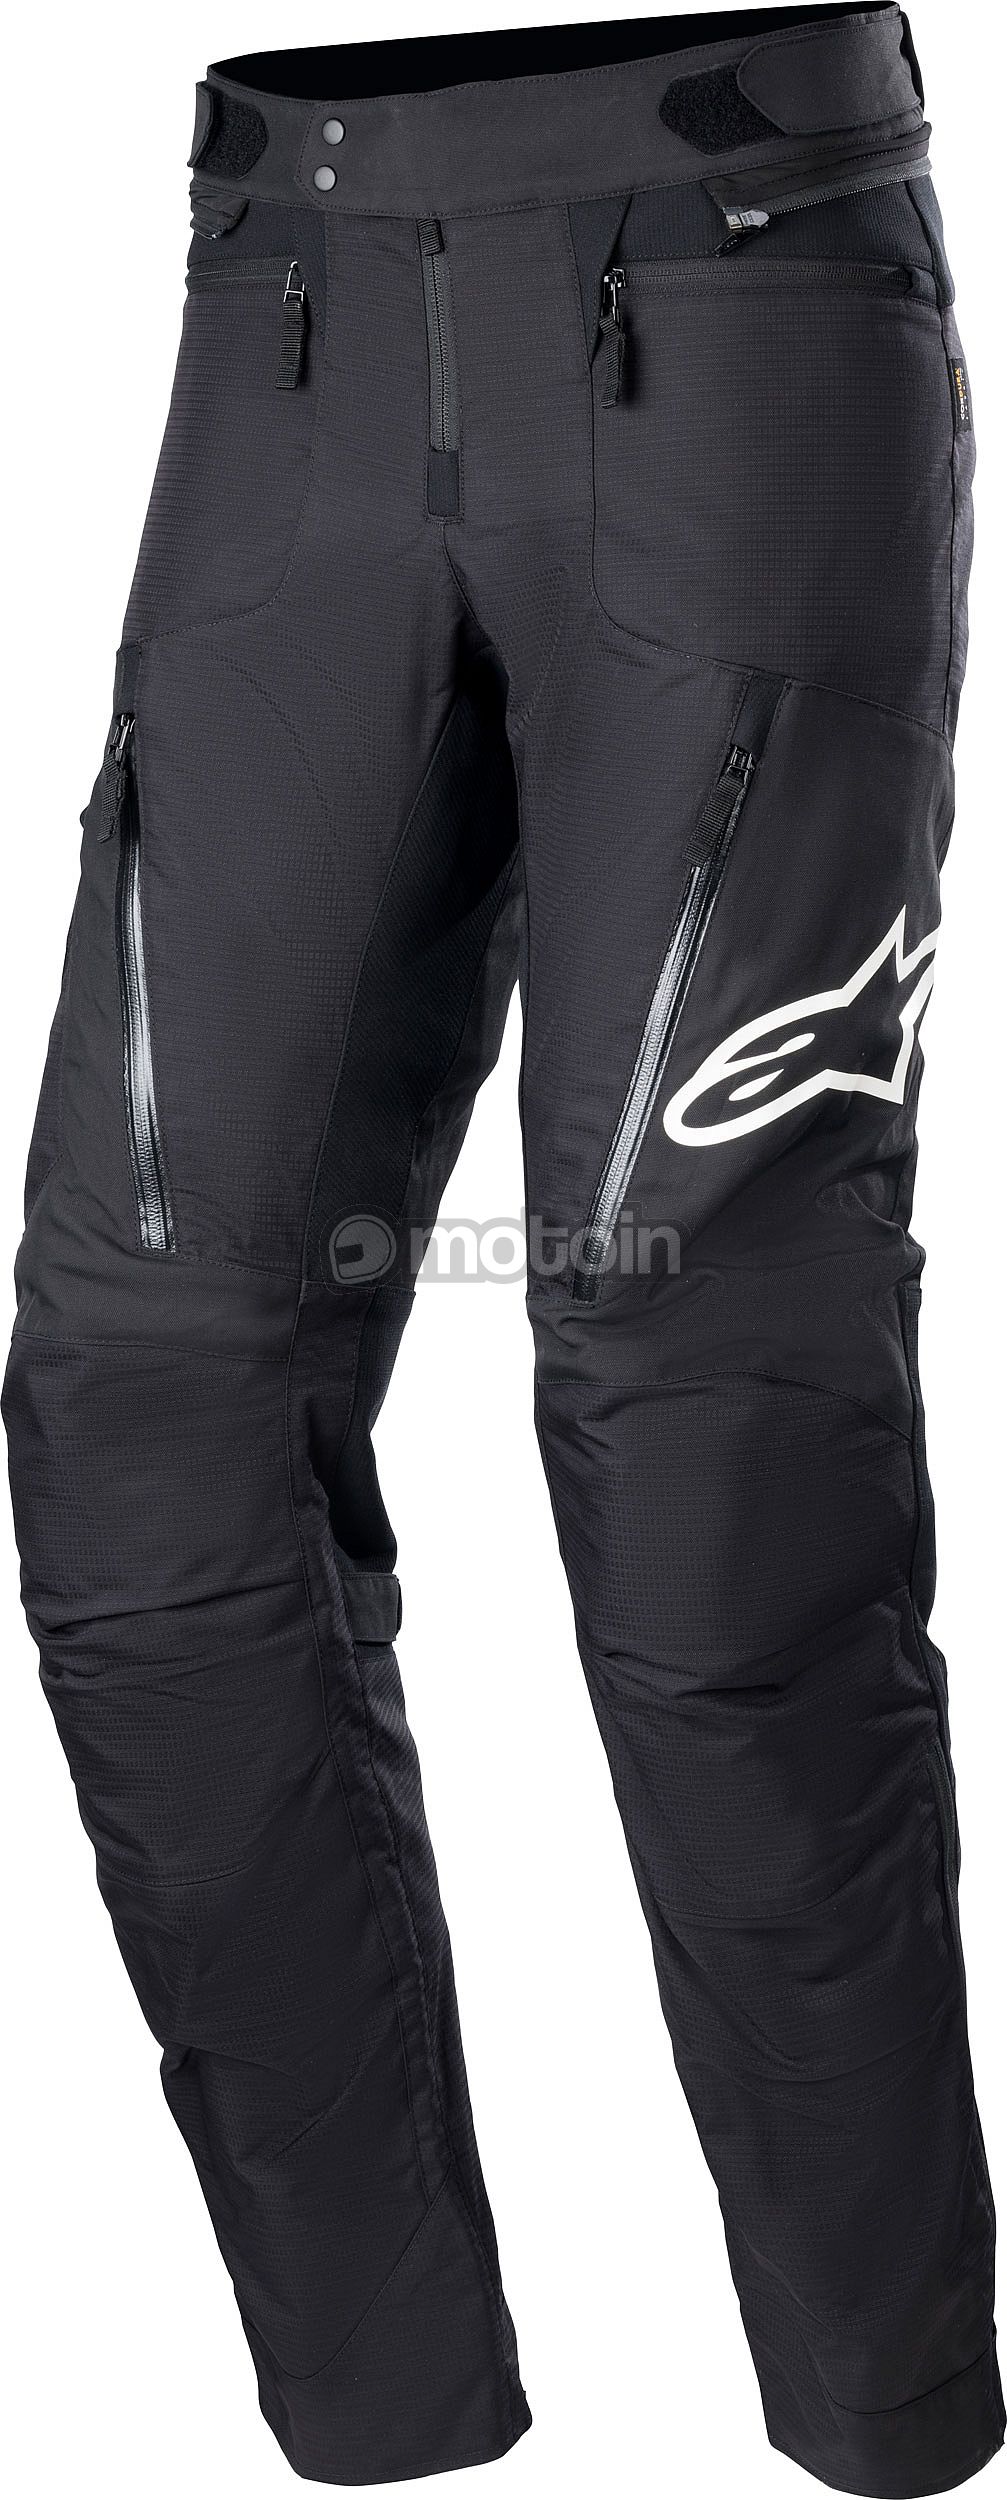 Alpinestars RX-3, pantaloni tessili impermeabili